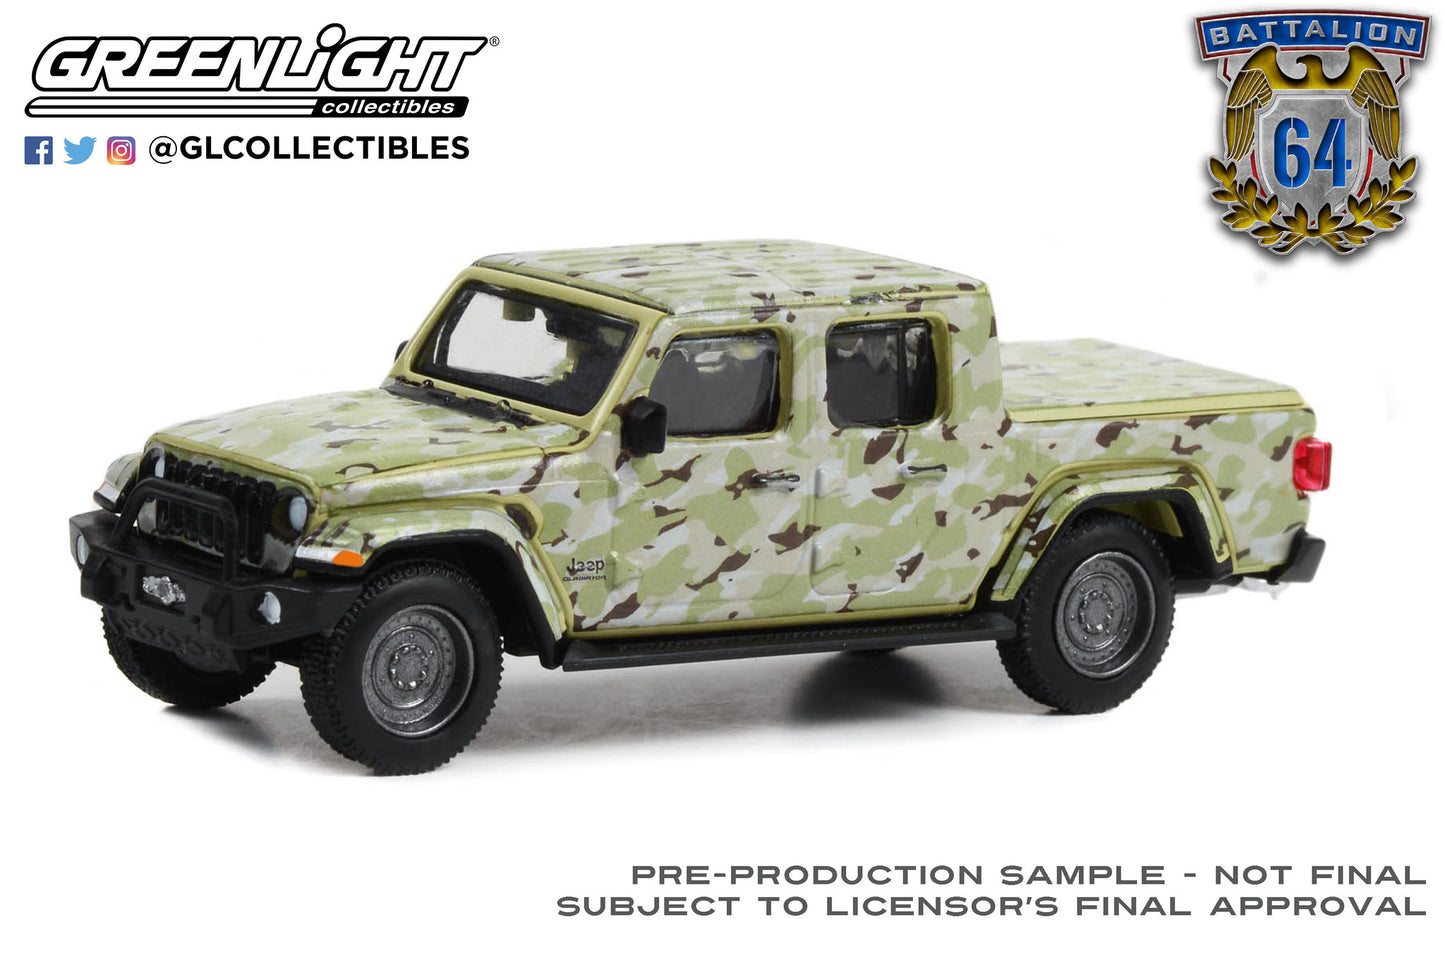 GreenLight 1:64 Battalion 64 Series 3 - 2022 Jeep Gladiator - U.S. Army - Military-Spec Camouflage 61030-F